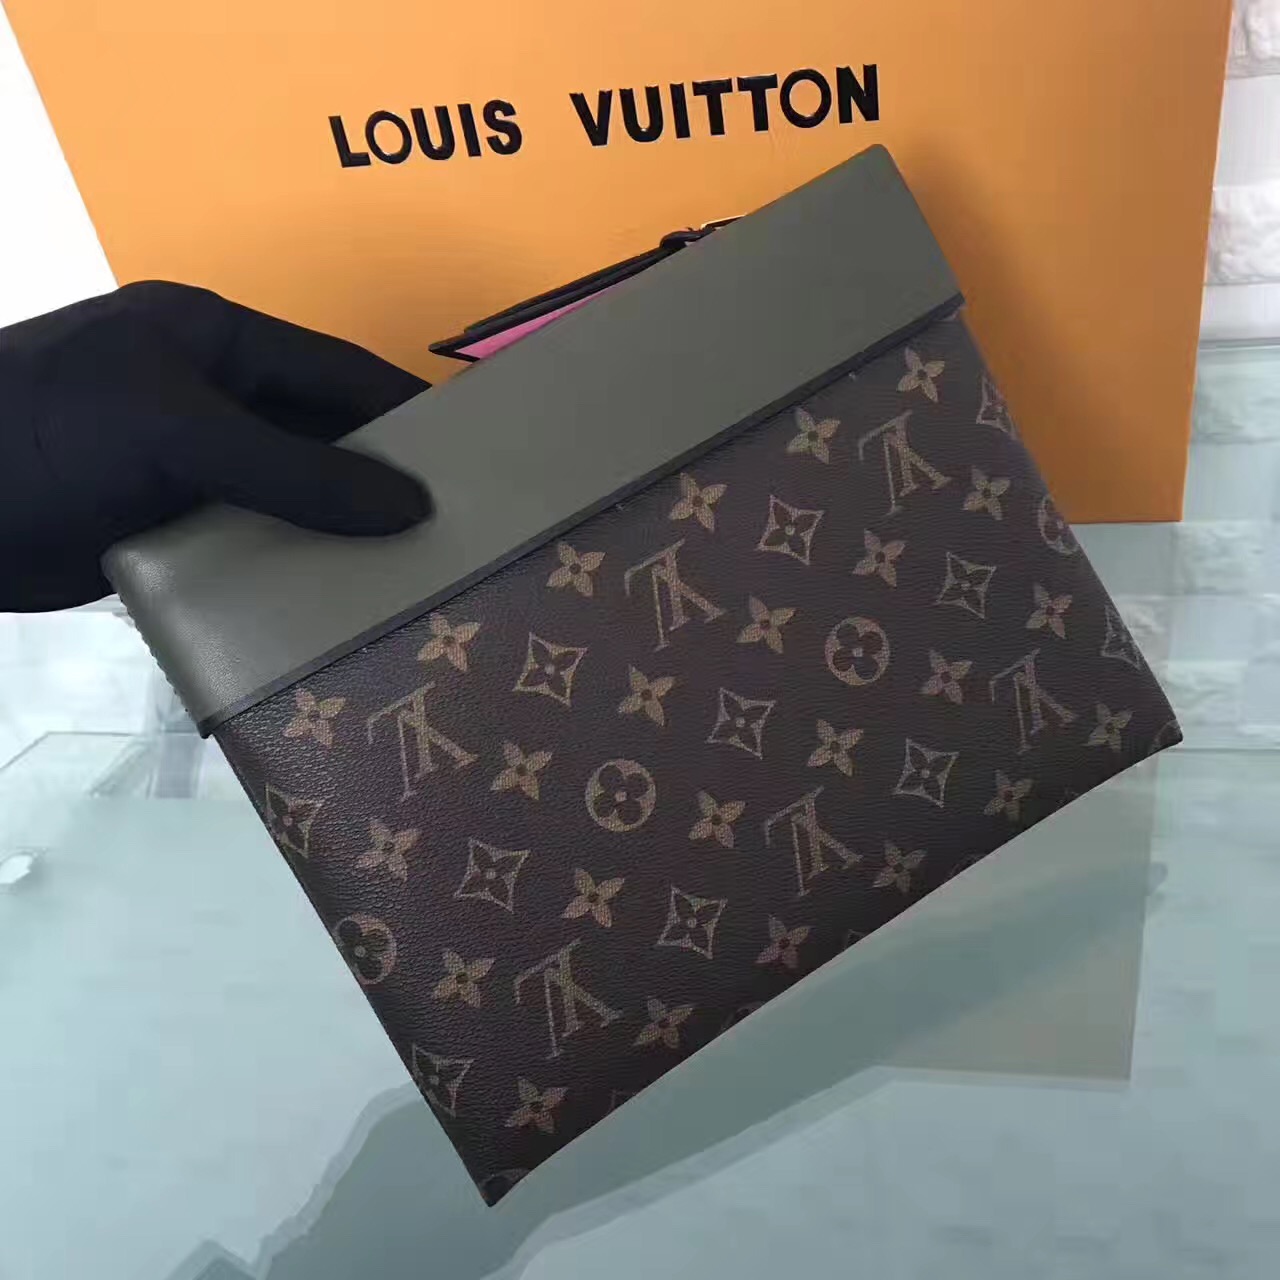 LV Louis Vuitton leather monogram v clutch handbags